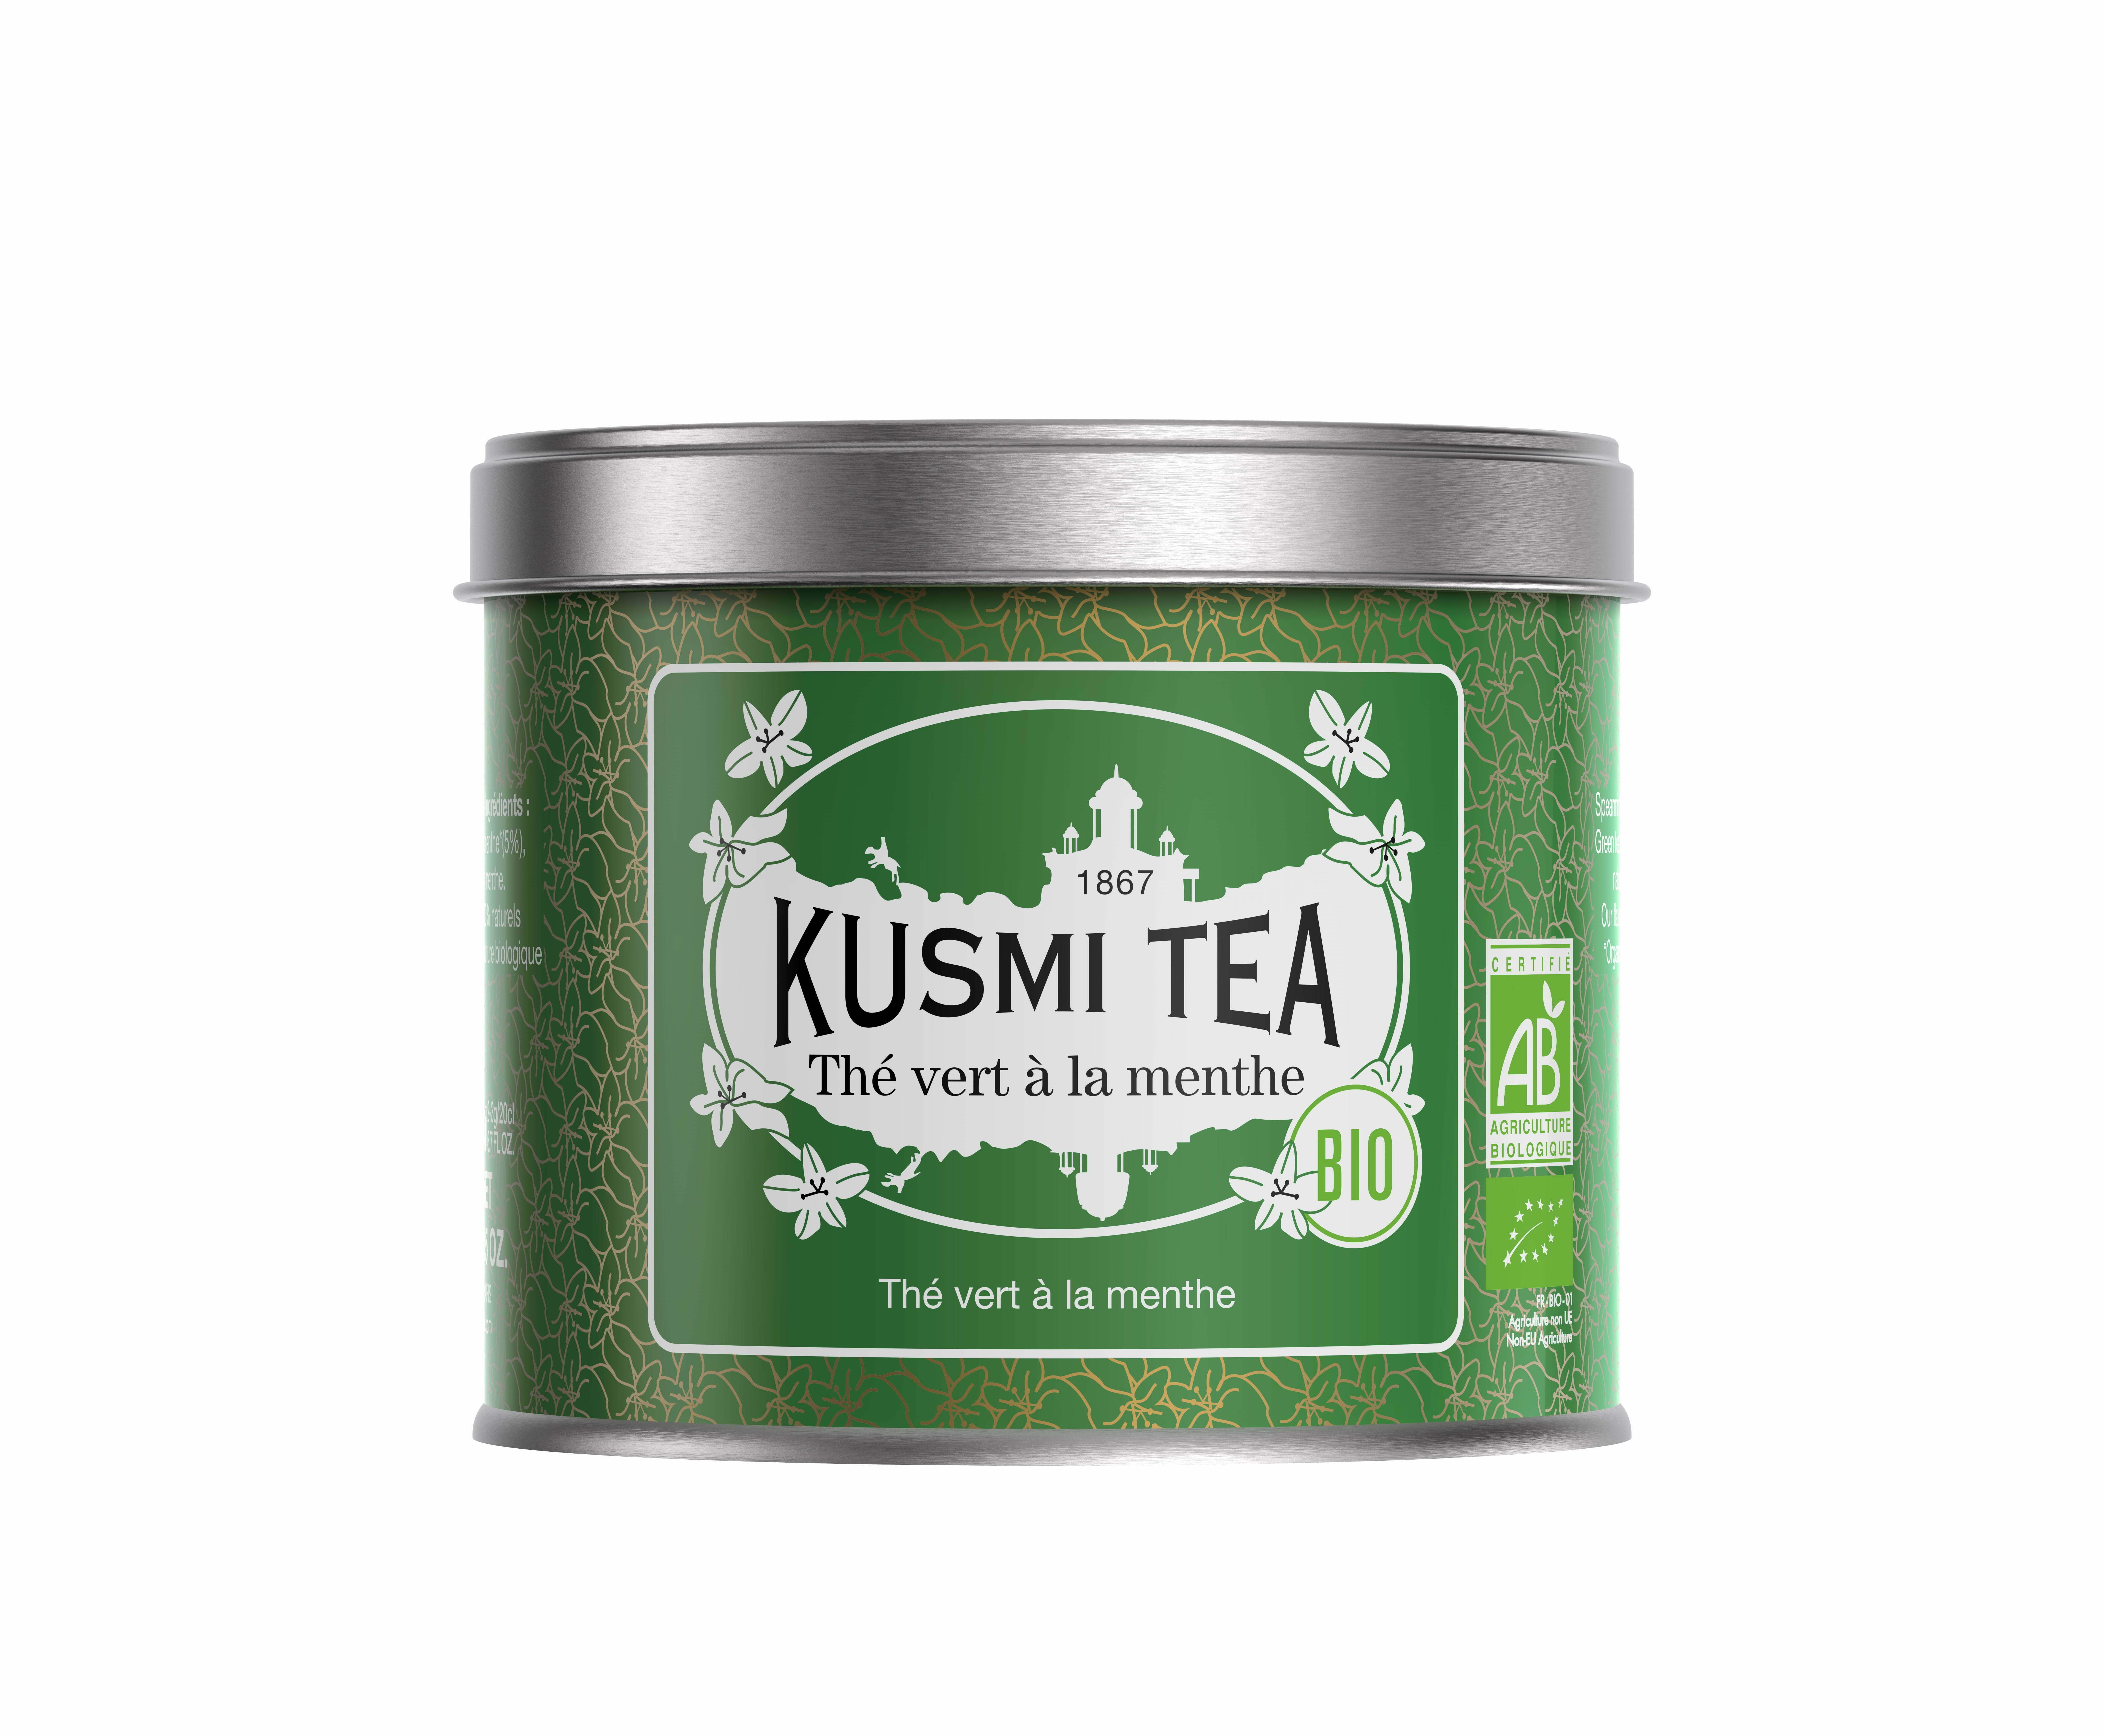 Archives des Thés verts aromatisés • Kusmi Tea Réunion